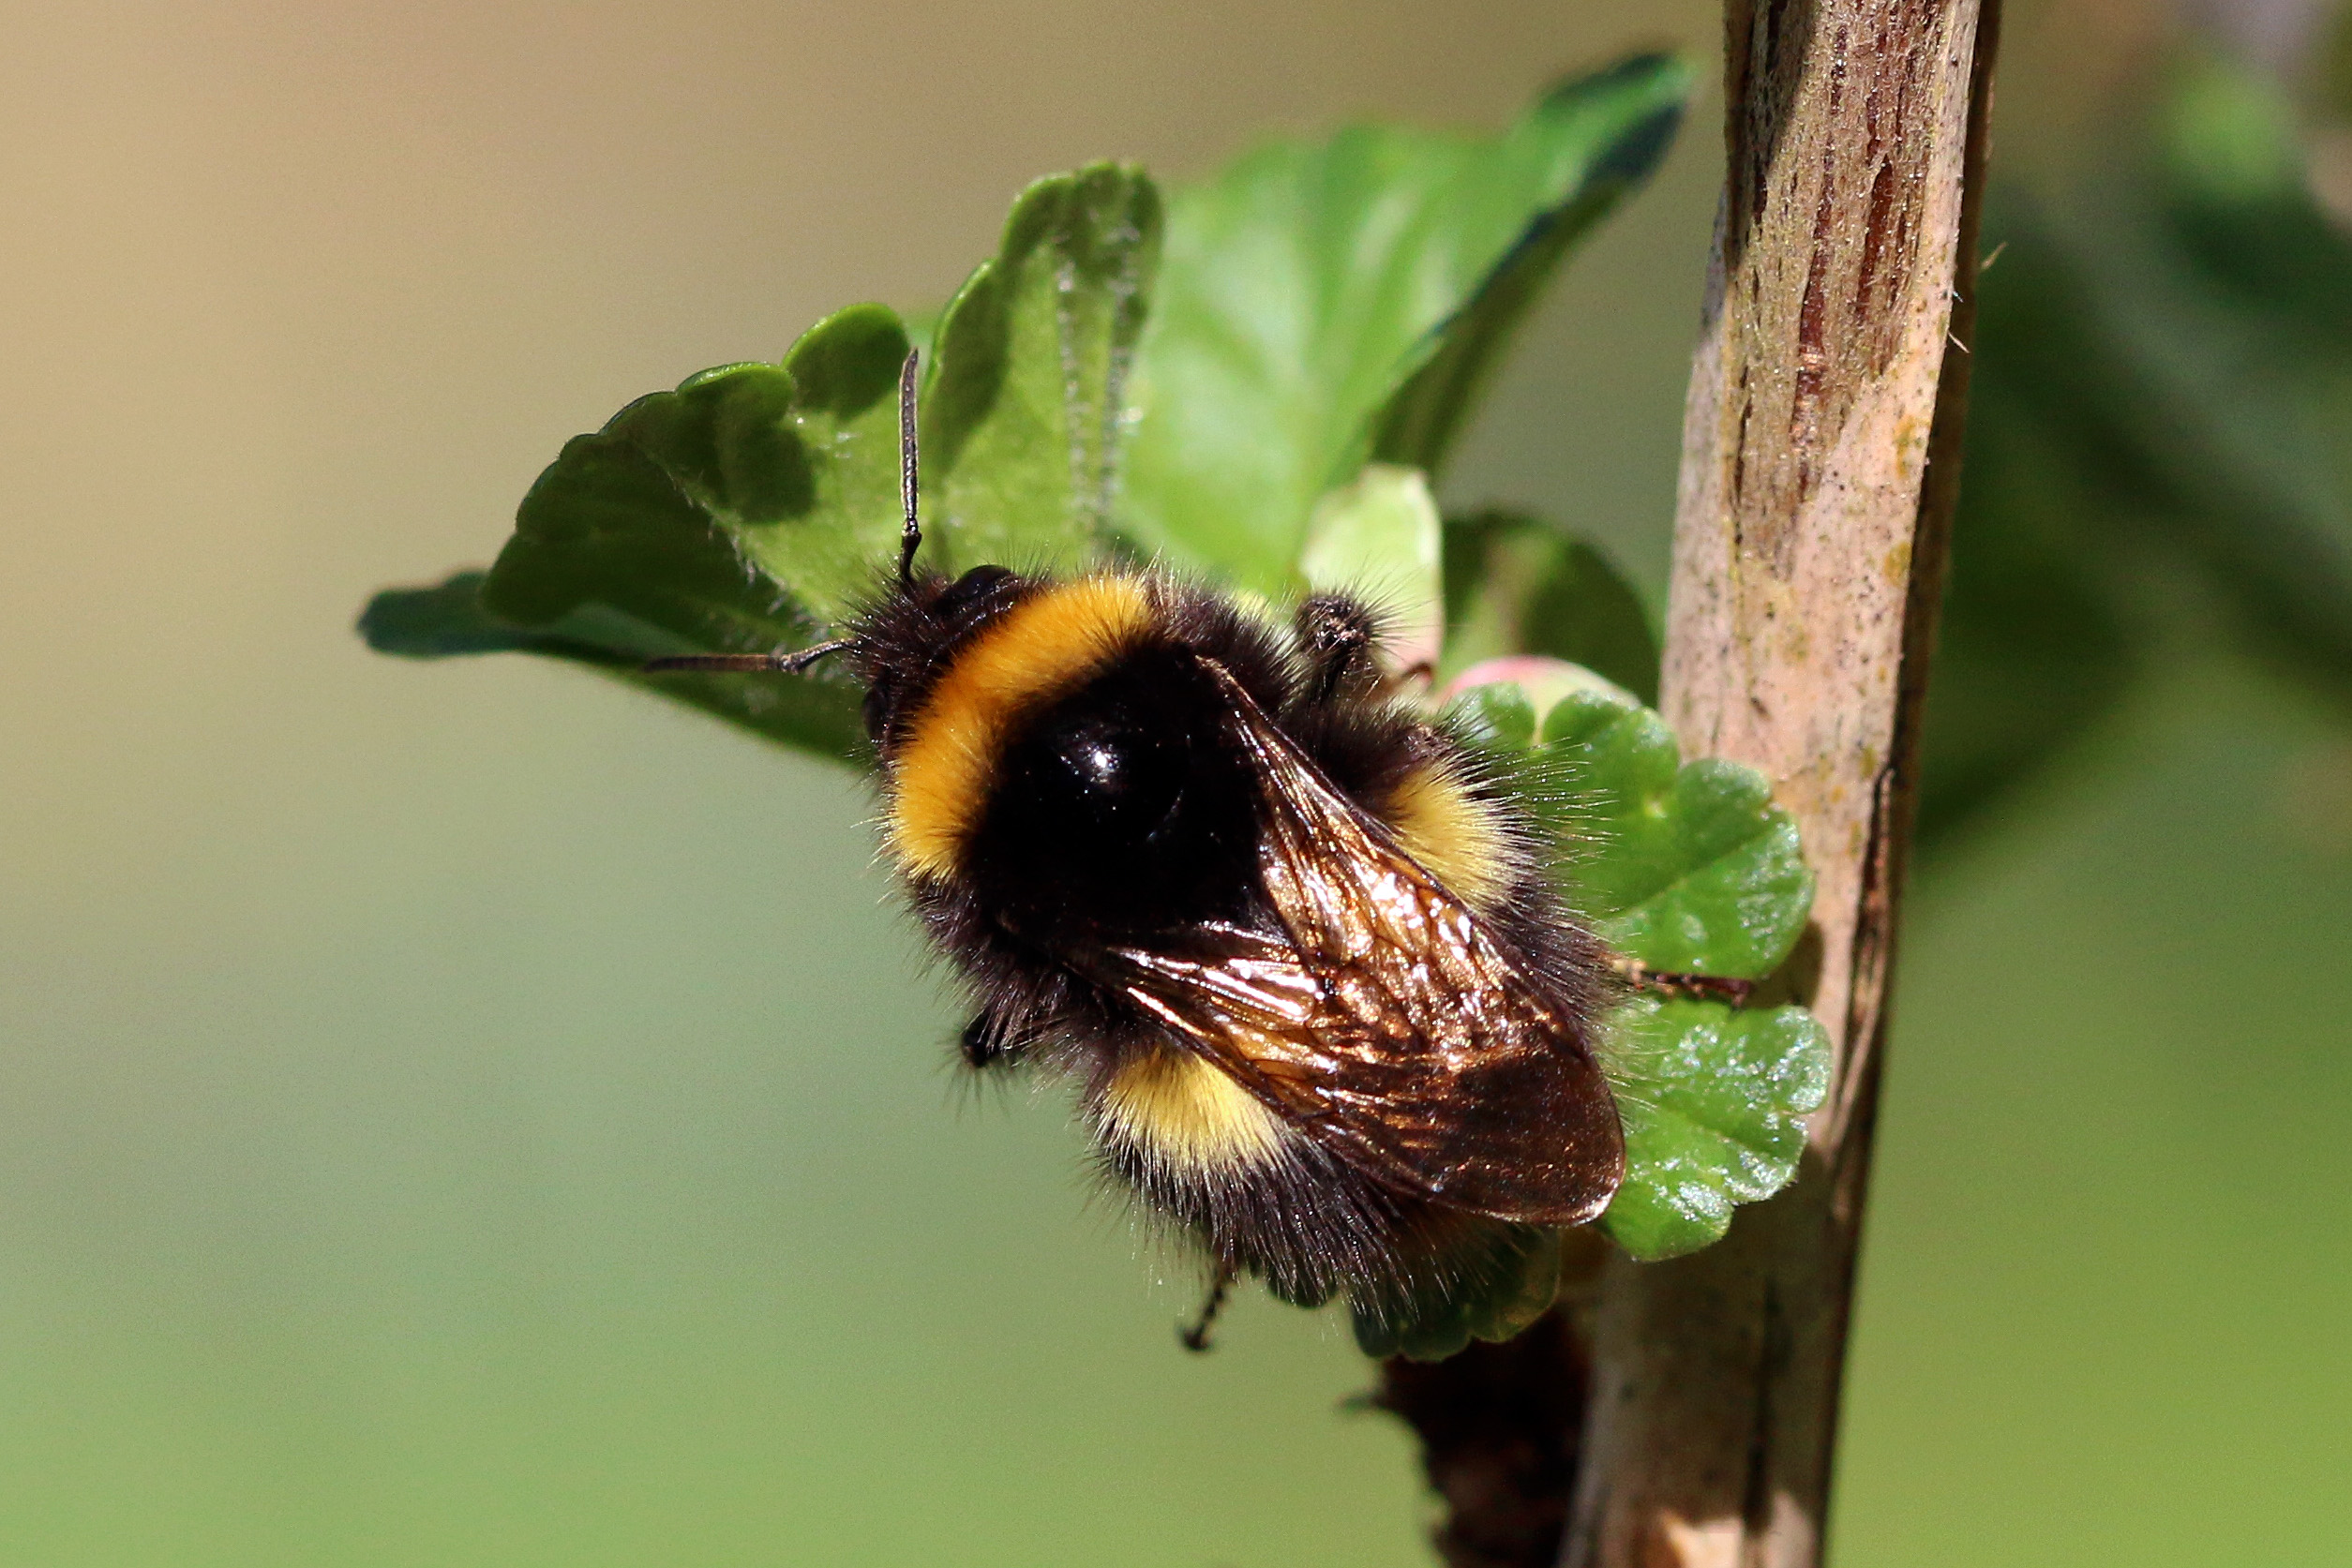 Buff-tailed bumblebee (Bombus terrestris) 2